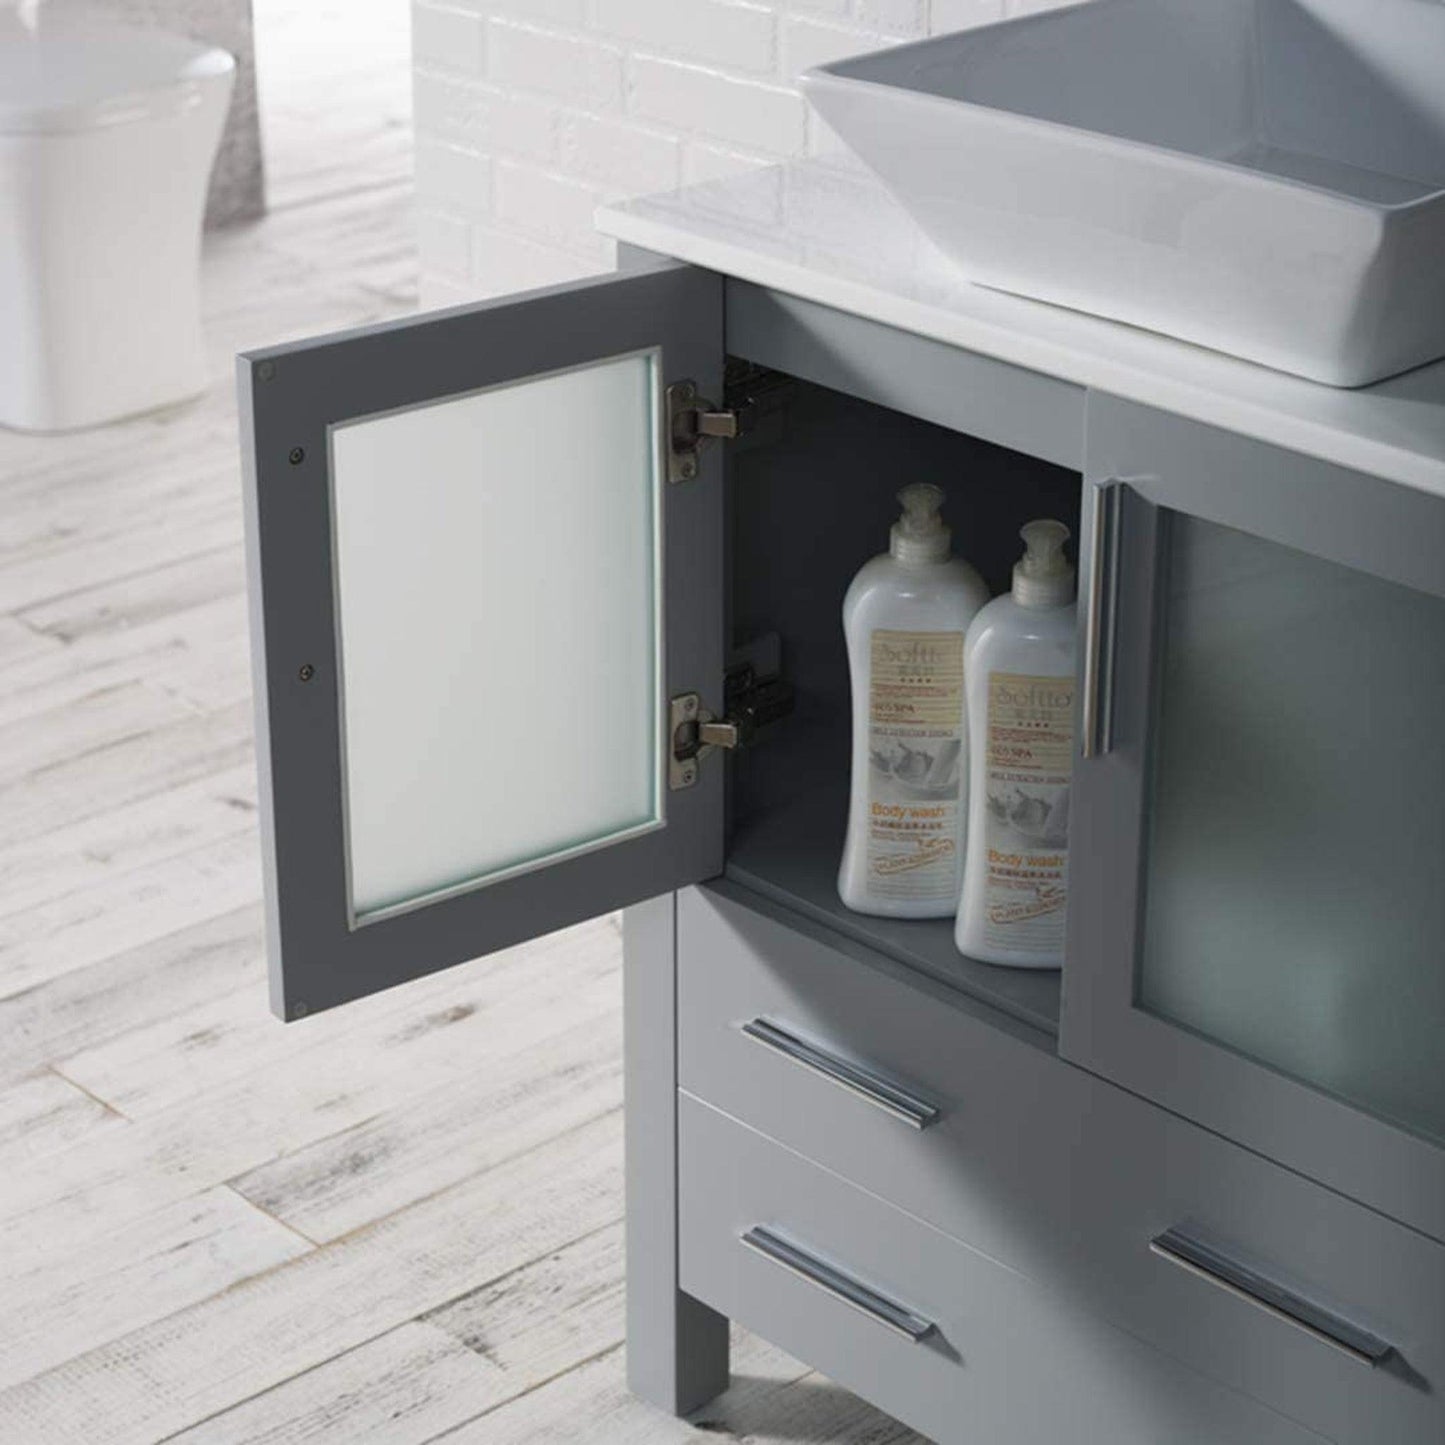 Blossom Sydney 42" Metal Gray Freestanding Vanity Set With Ceramic Vessel Single Sink and Side Cabinet